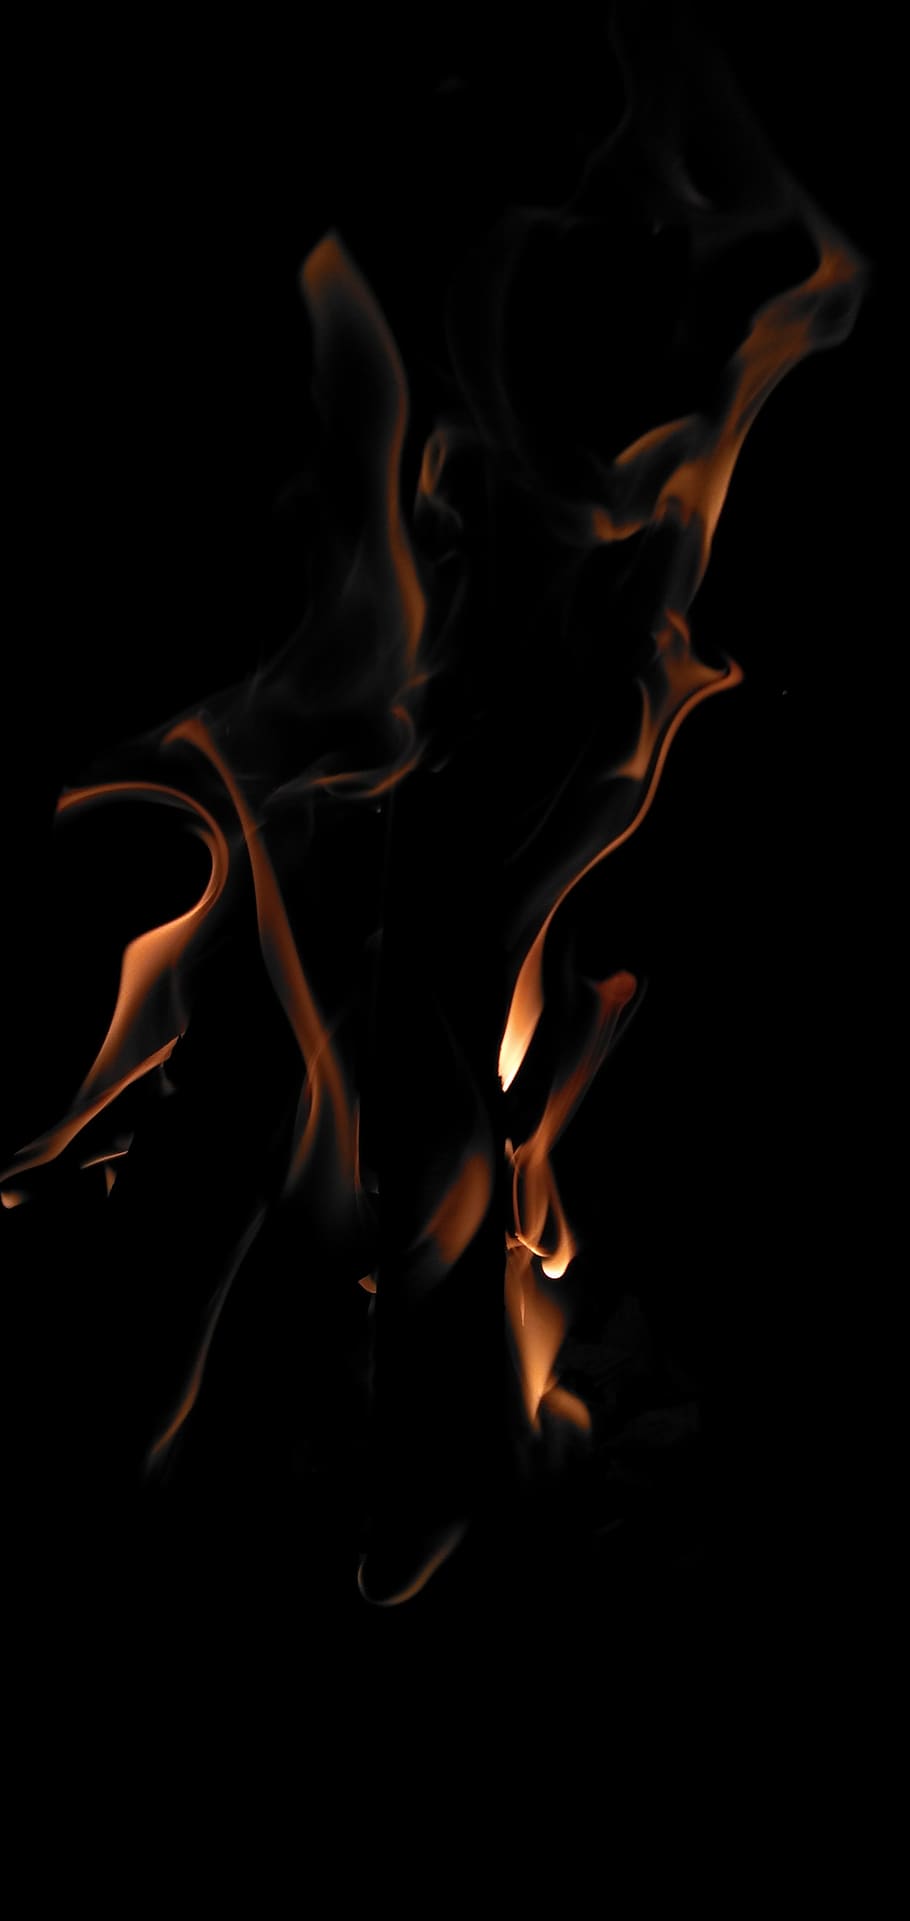 fire, flame, heat, warm, hot, fireplace, burn, burning, black background, fire - natural phenomenon